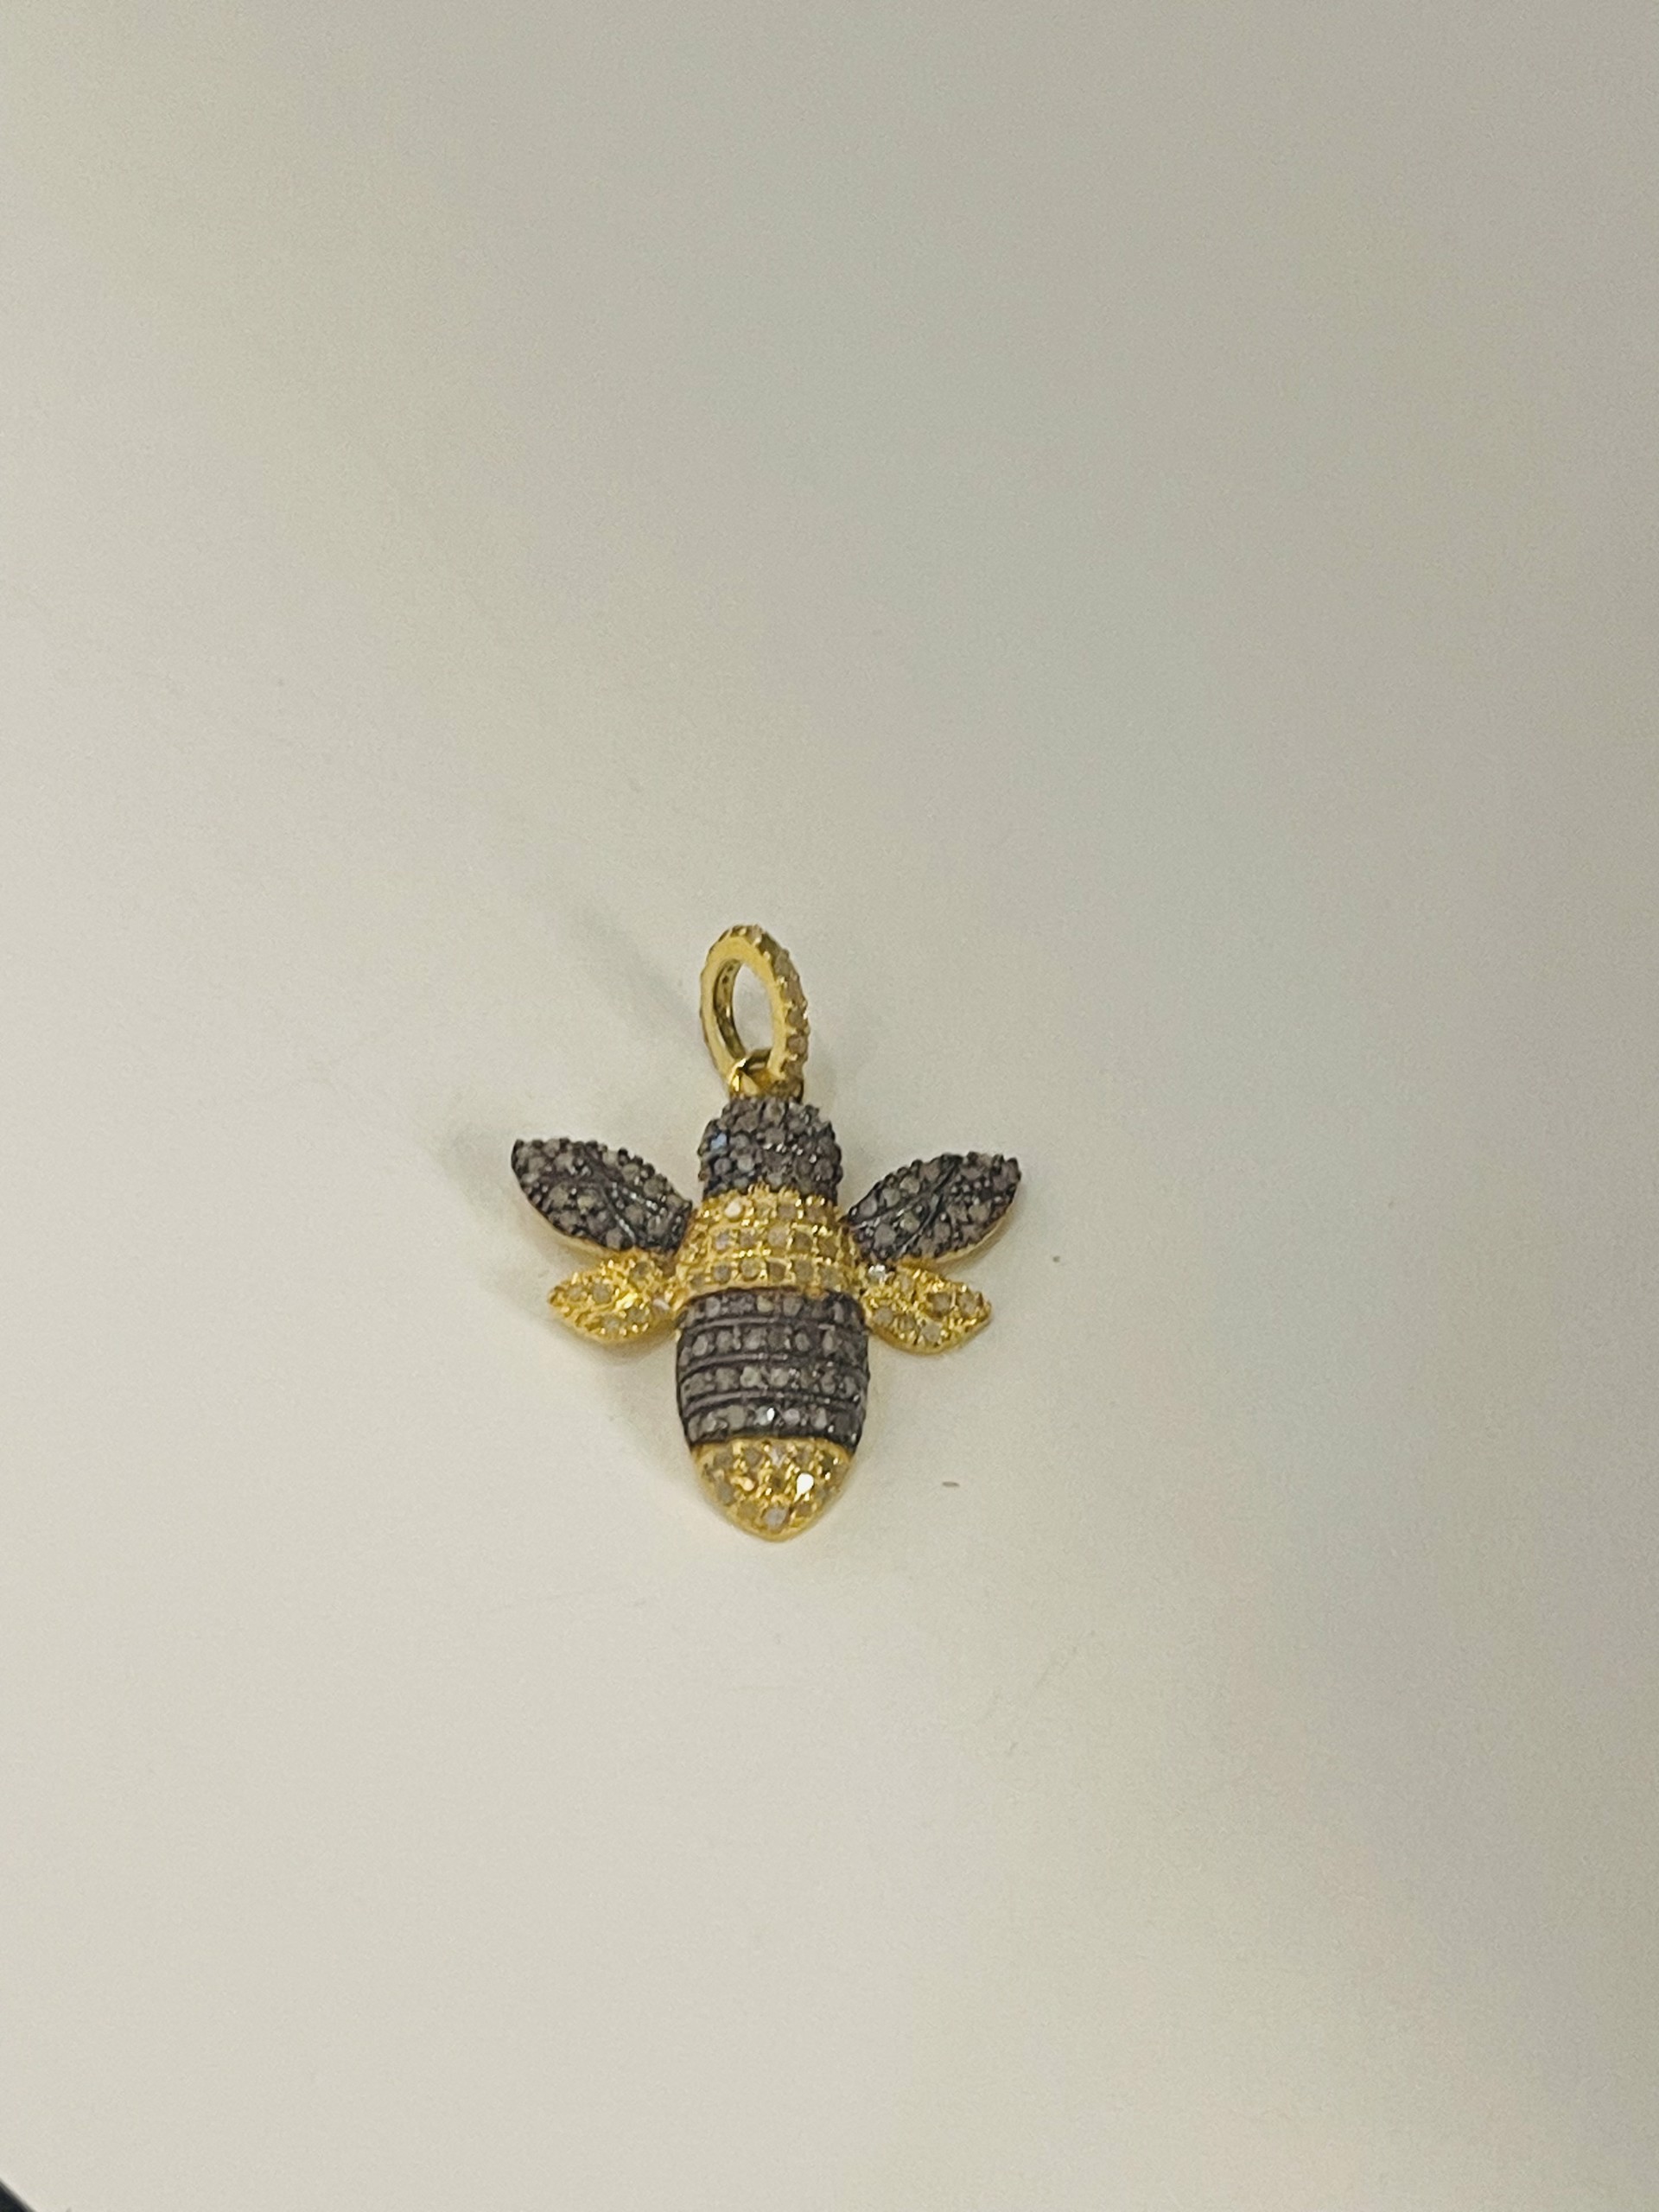 Black and Gold Pave Diamond Bee Pendant by Karen Birchmier